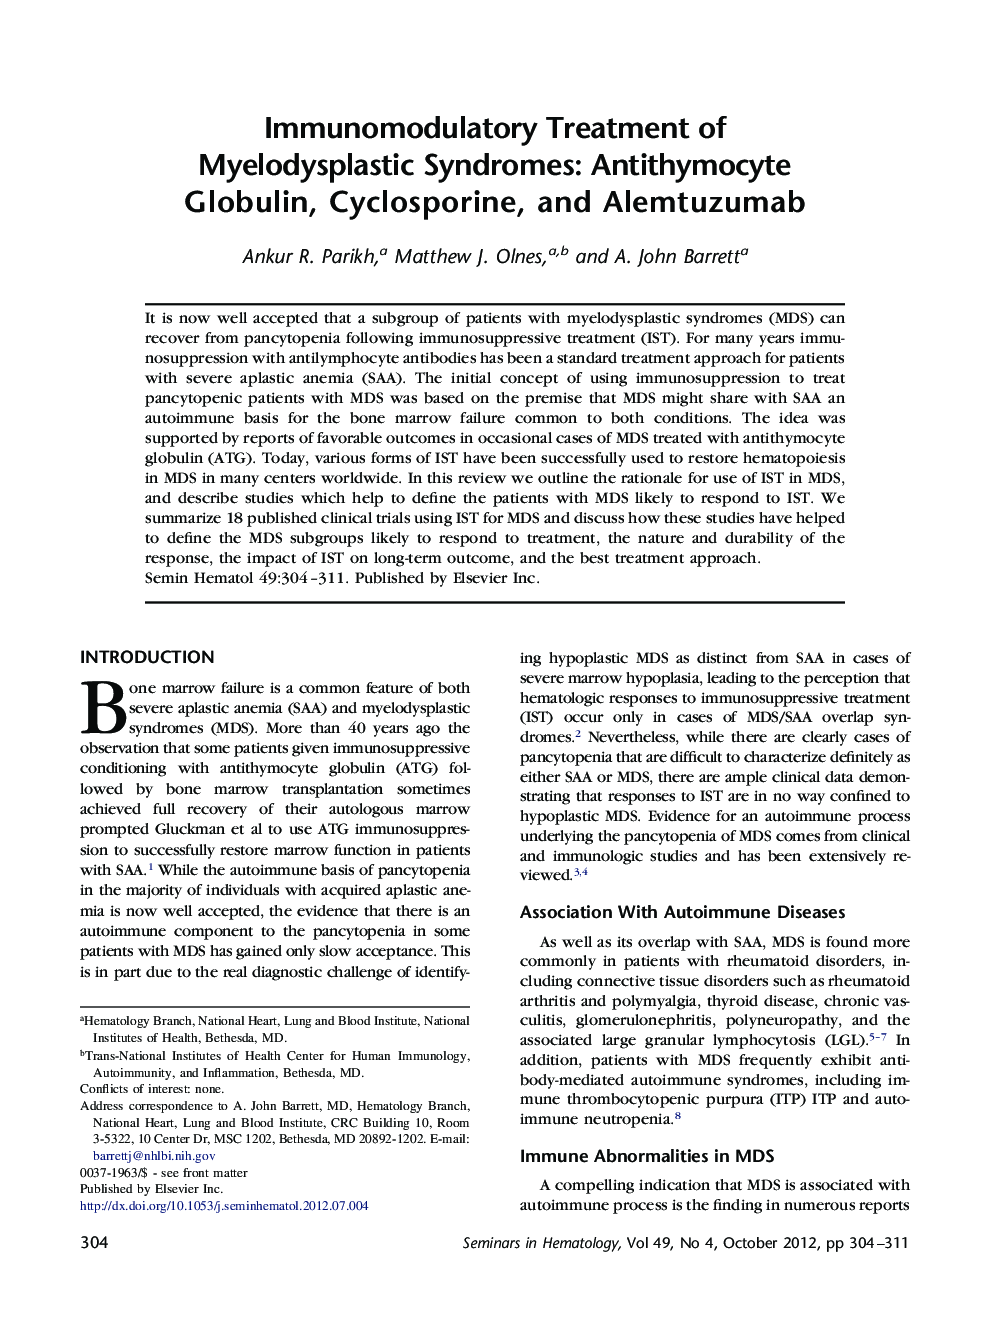 Immunomodulatory Treatment of Myelodysplastic Syndromes: Antithymocyte Globulin, Cyclosporine, and Alemtuzumab 